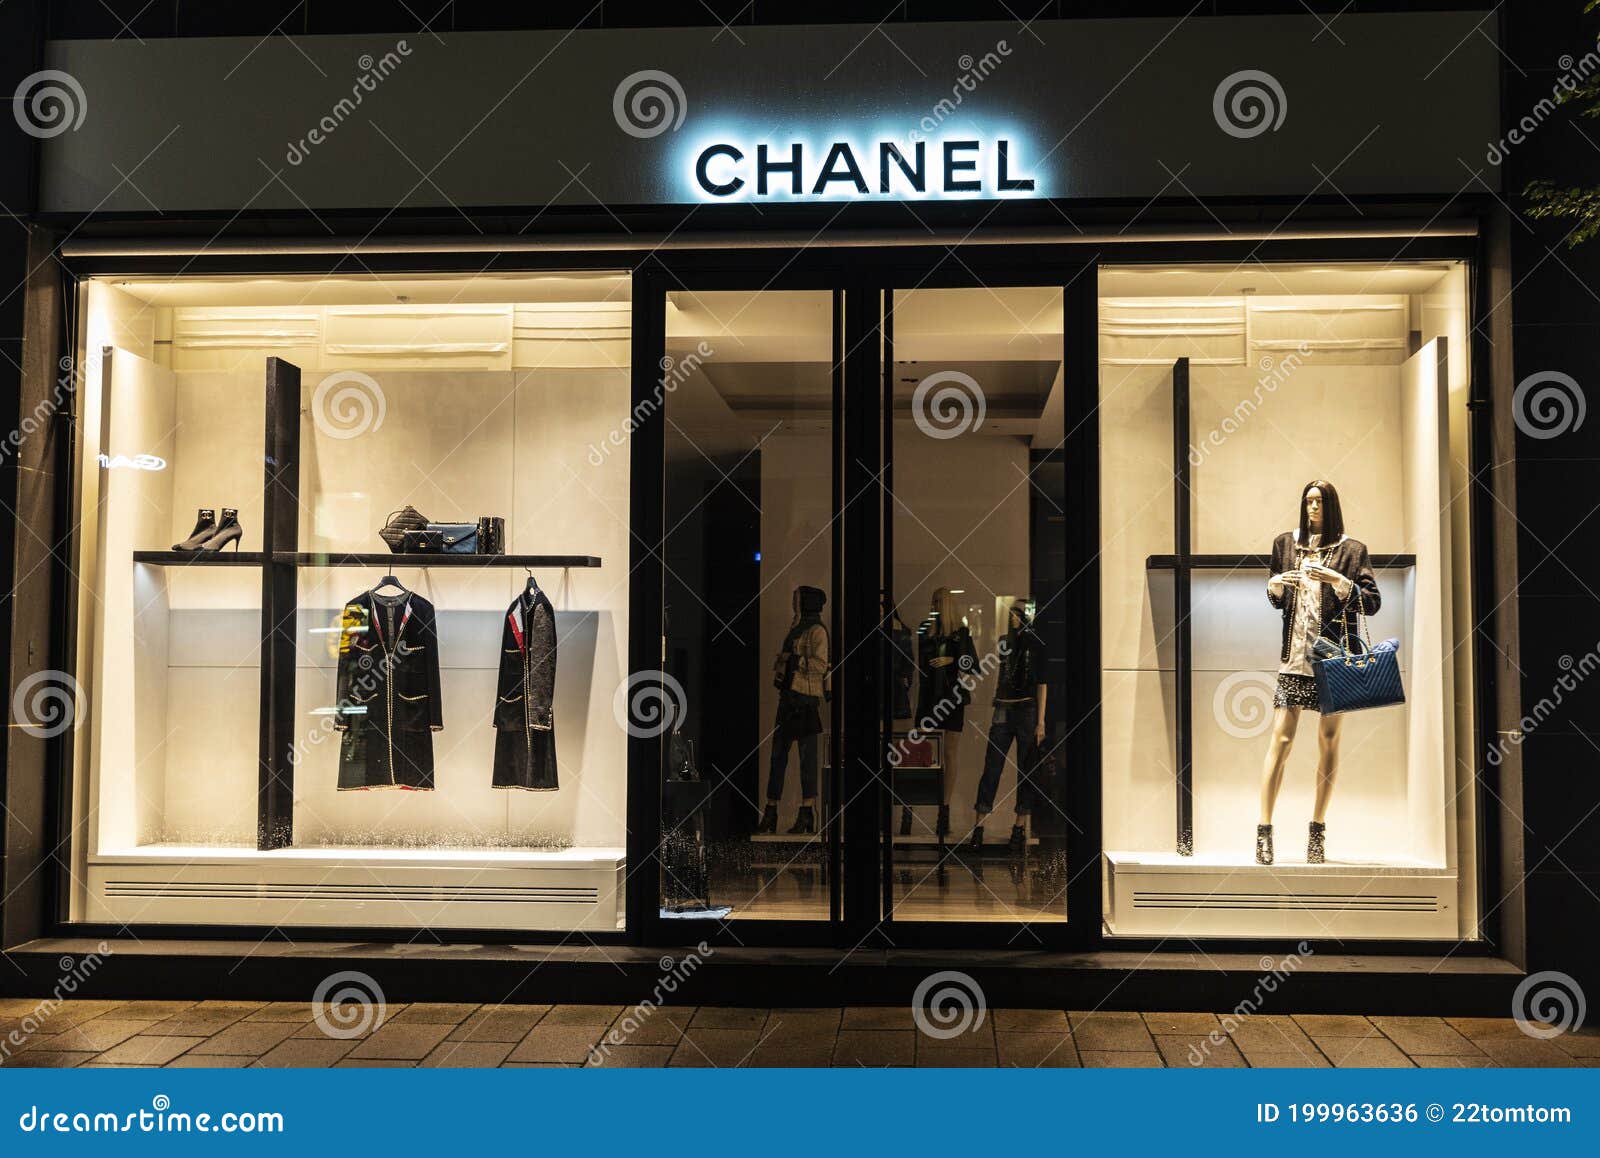 Chanel Luxury Clothing Store at Night in Hamburg, Germany Editorial Photo -  Image of fashion, neuer: 199963636